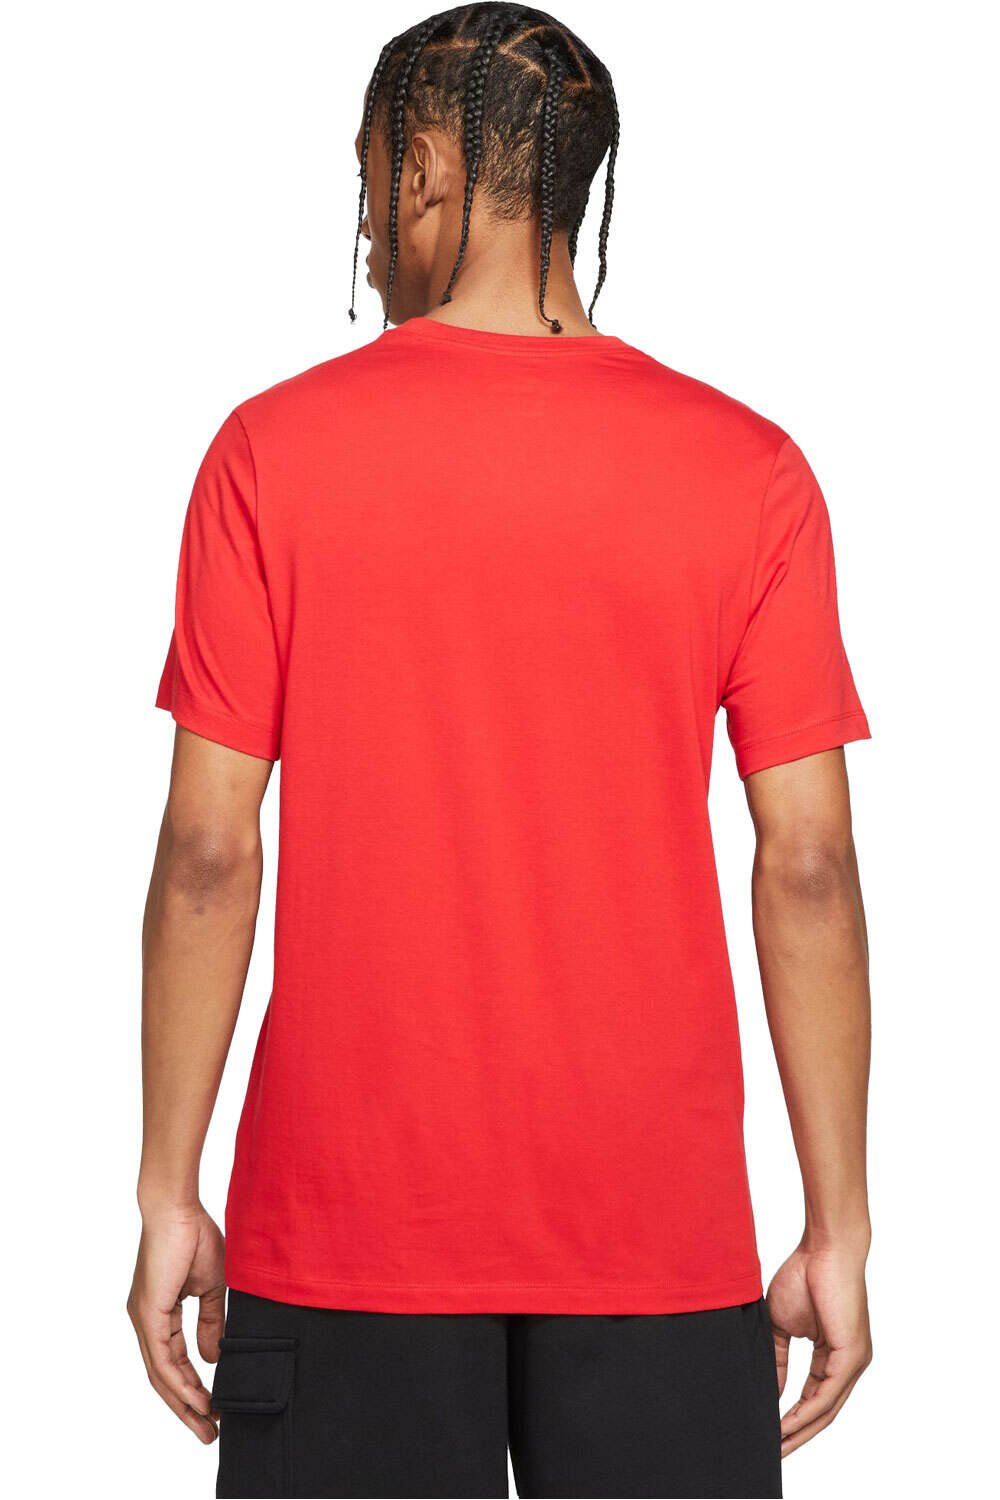 Nike camiseta manga corta hombre M NSW TEE ICON FUTURA vista trasera